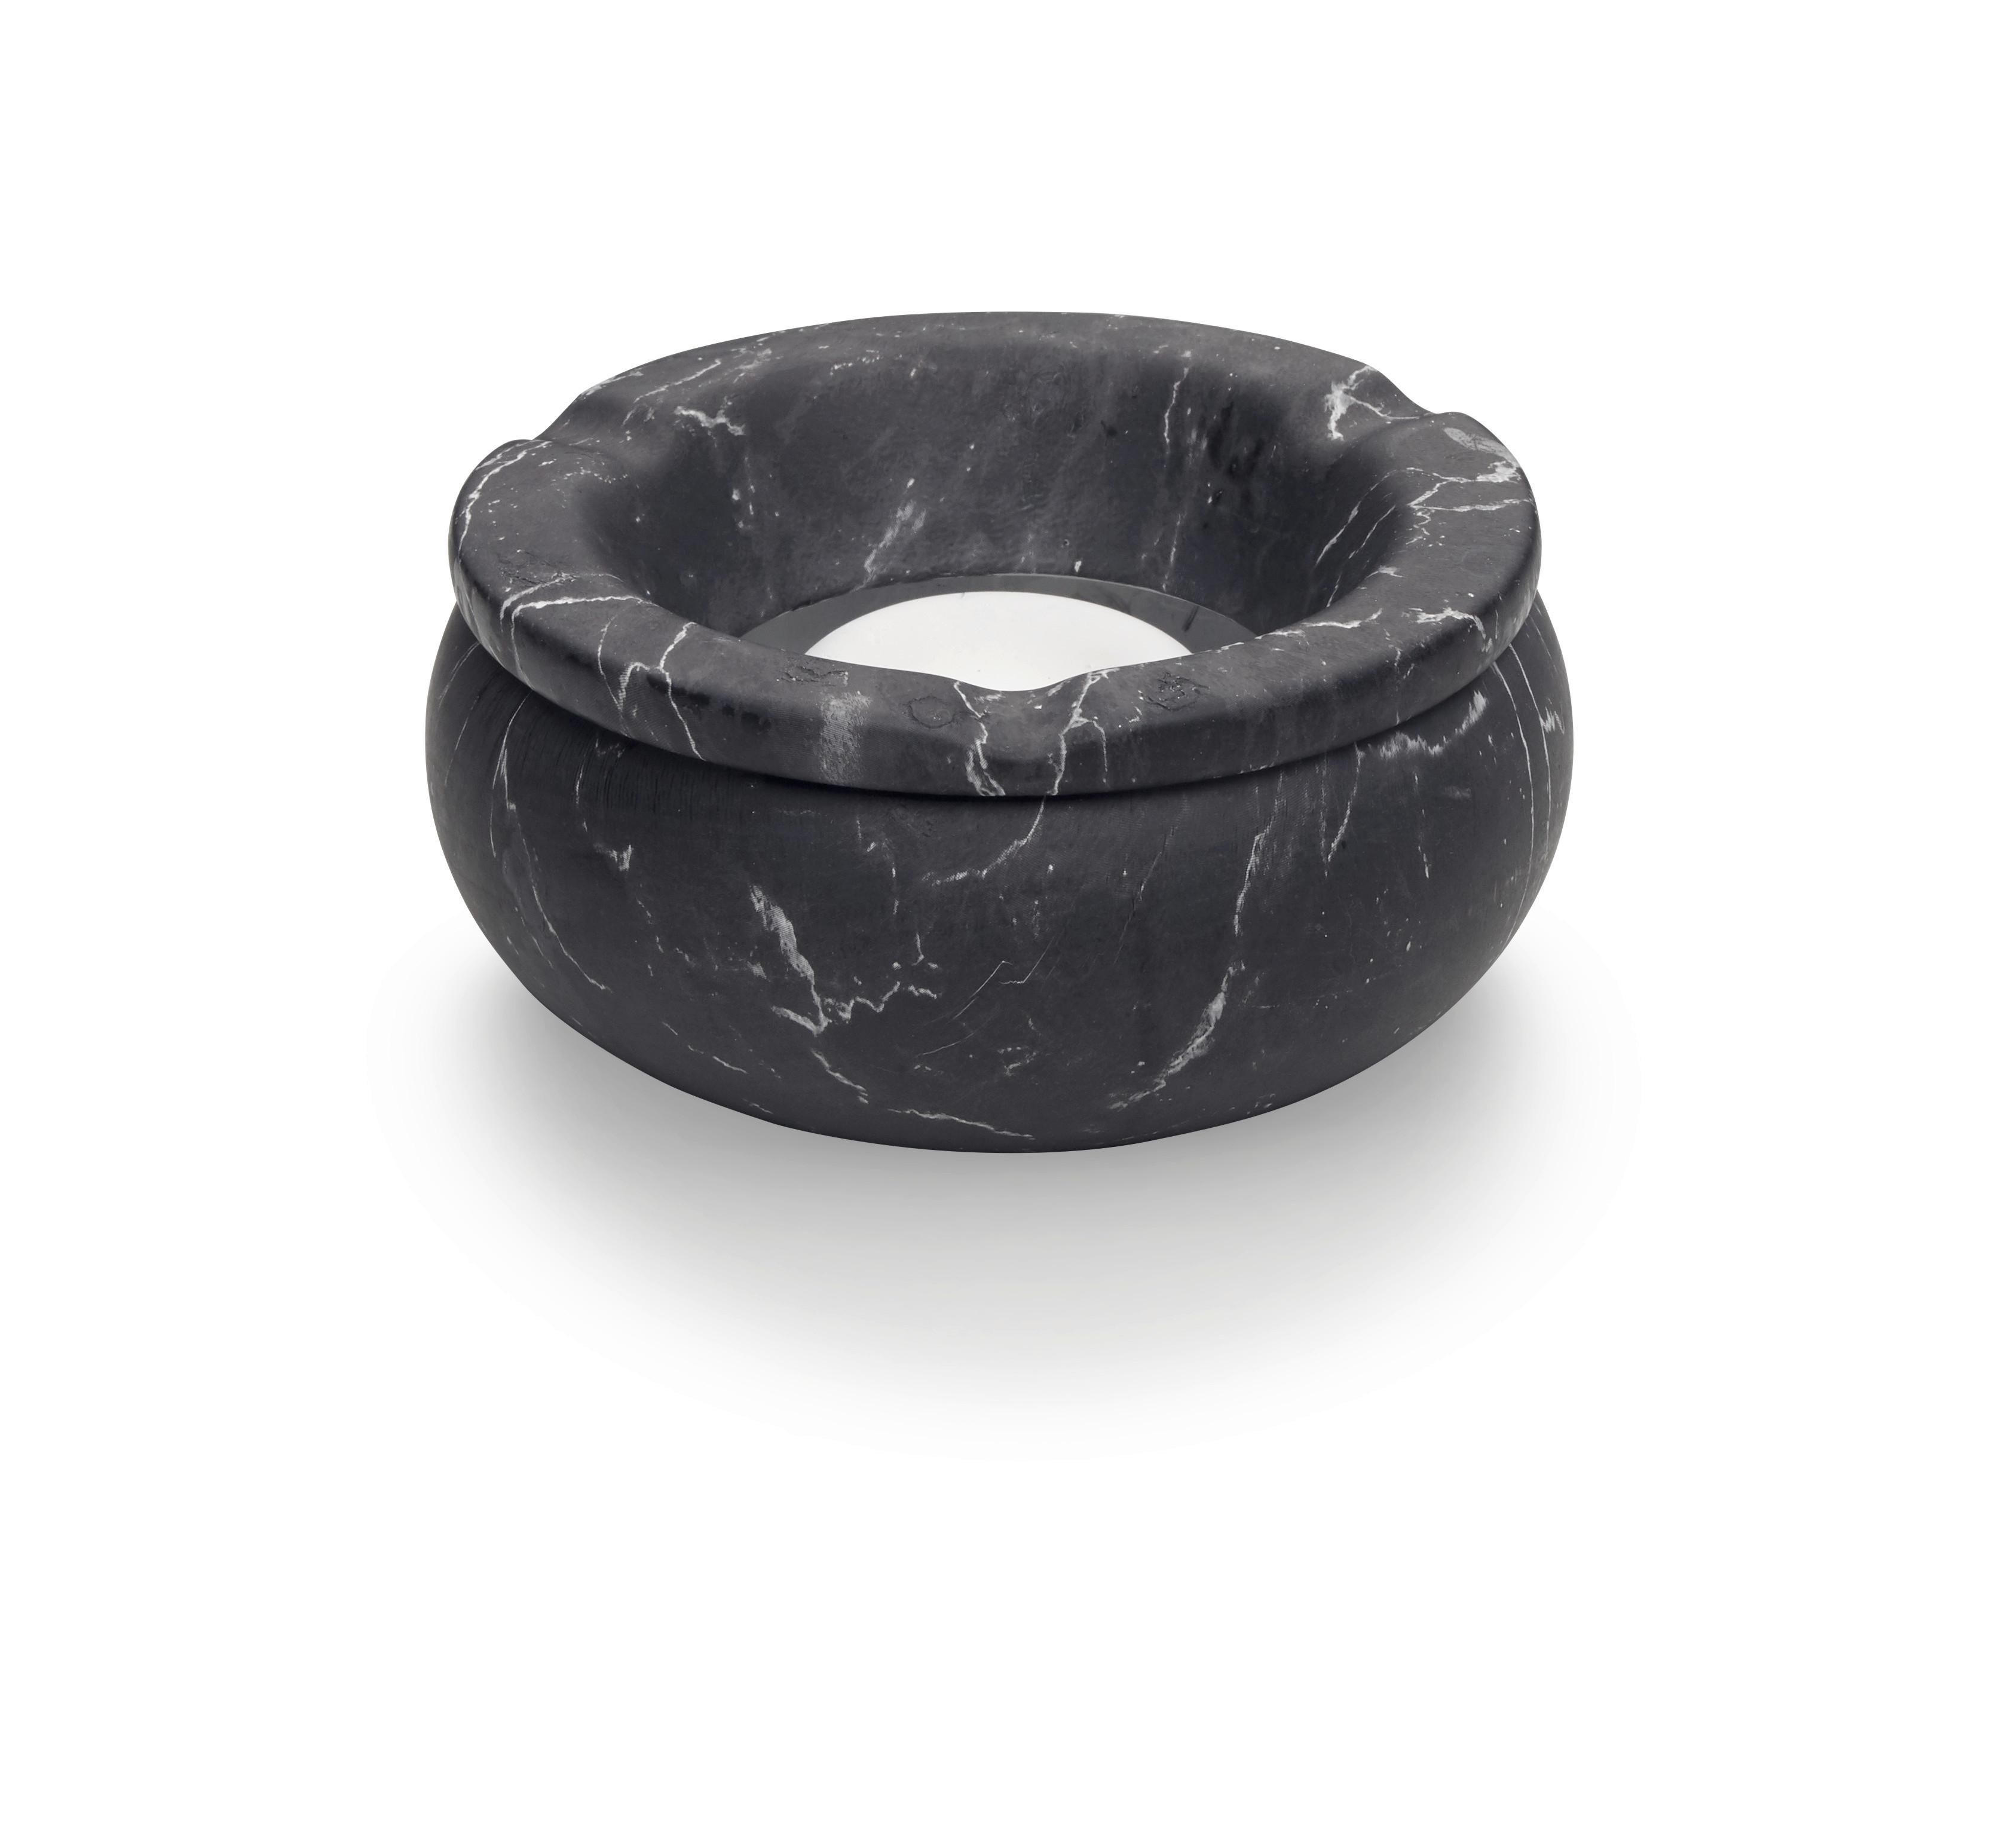 Aschenbecher Marble aus Keramik - Schwarz, Keramik (15/5,7cm) - Modern Living